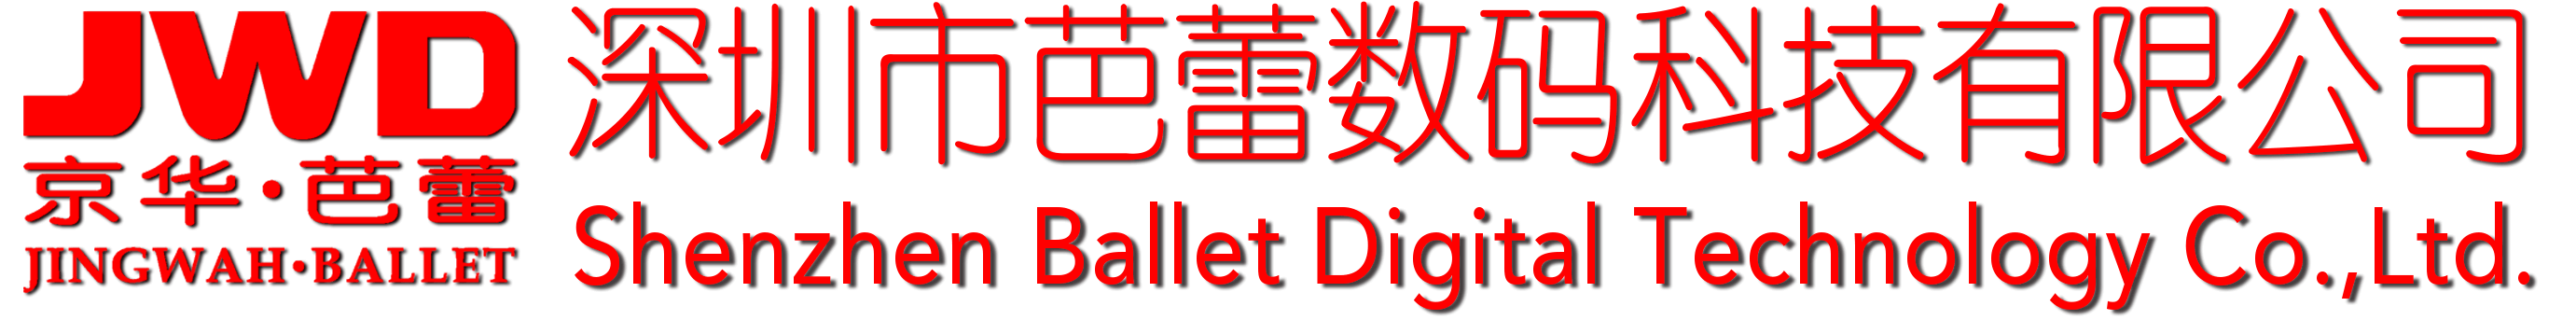 Shenzhen Ballet Digital Technology Co., Ltd.